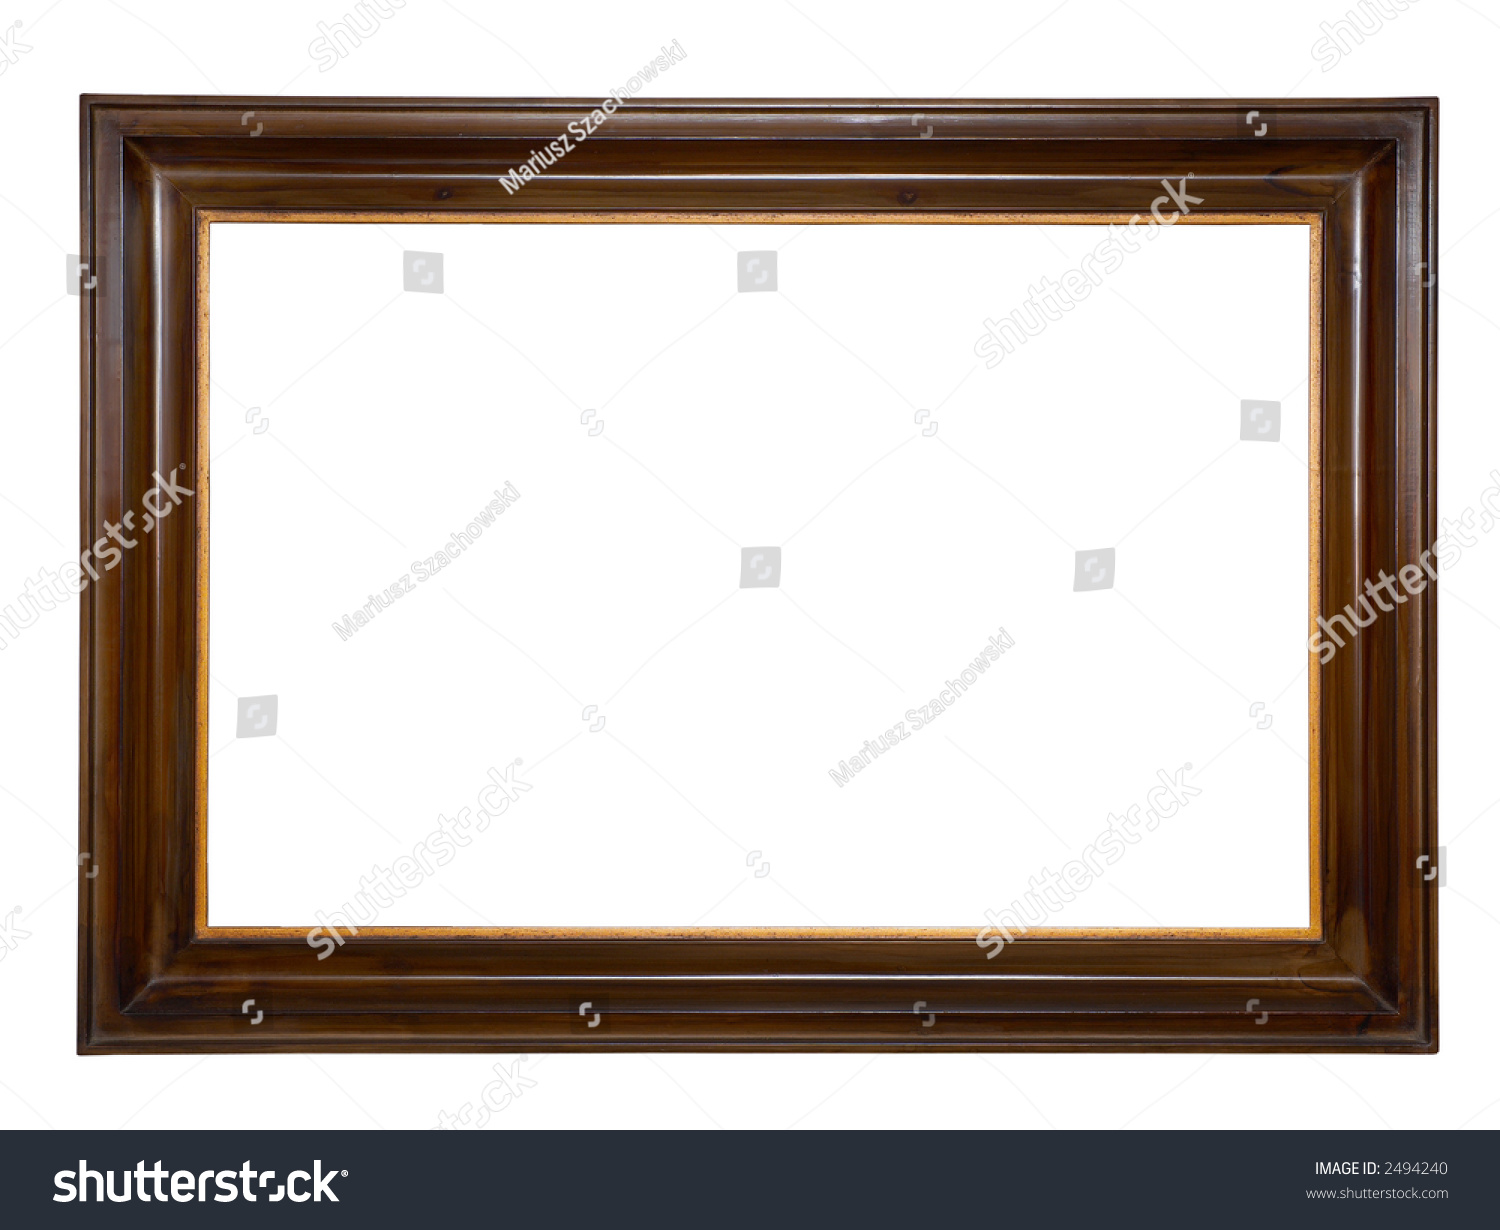 Antique Wooden Frame. Stock Photo 2494240 : Shutterstock